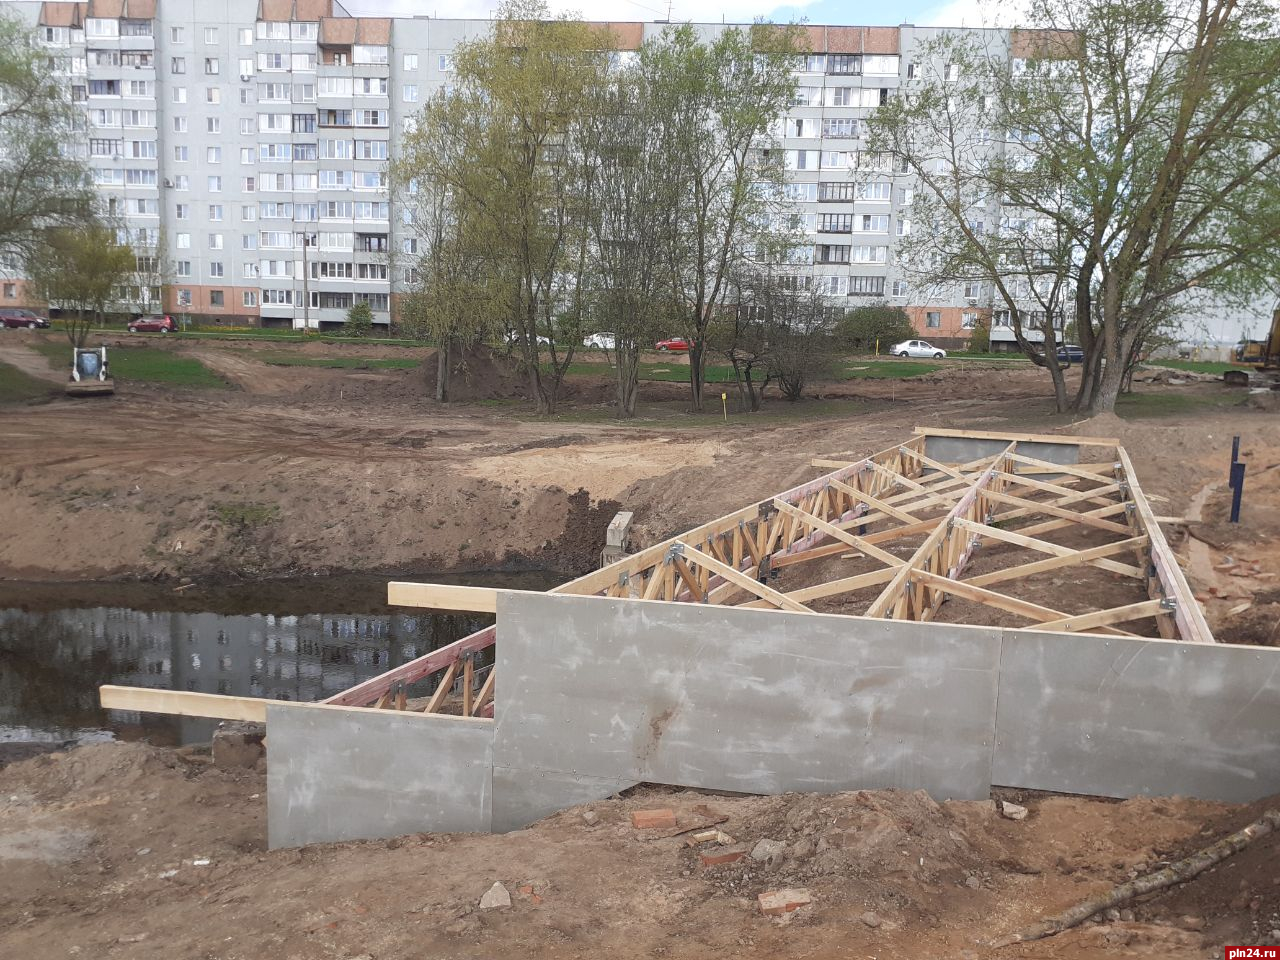 Фундамент площадки для кормления уток устанавливают у реки Милевки в Пскове. ФОТО